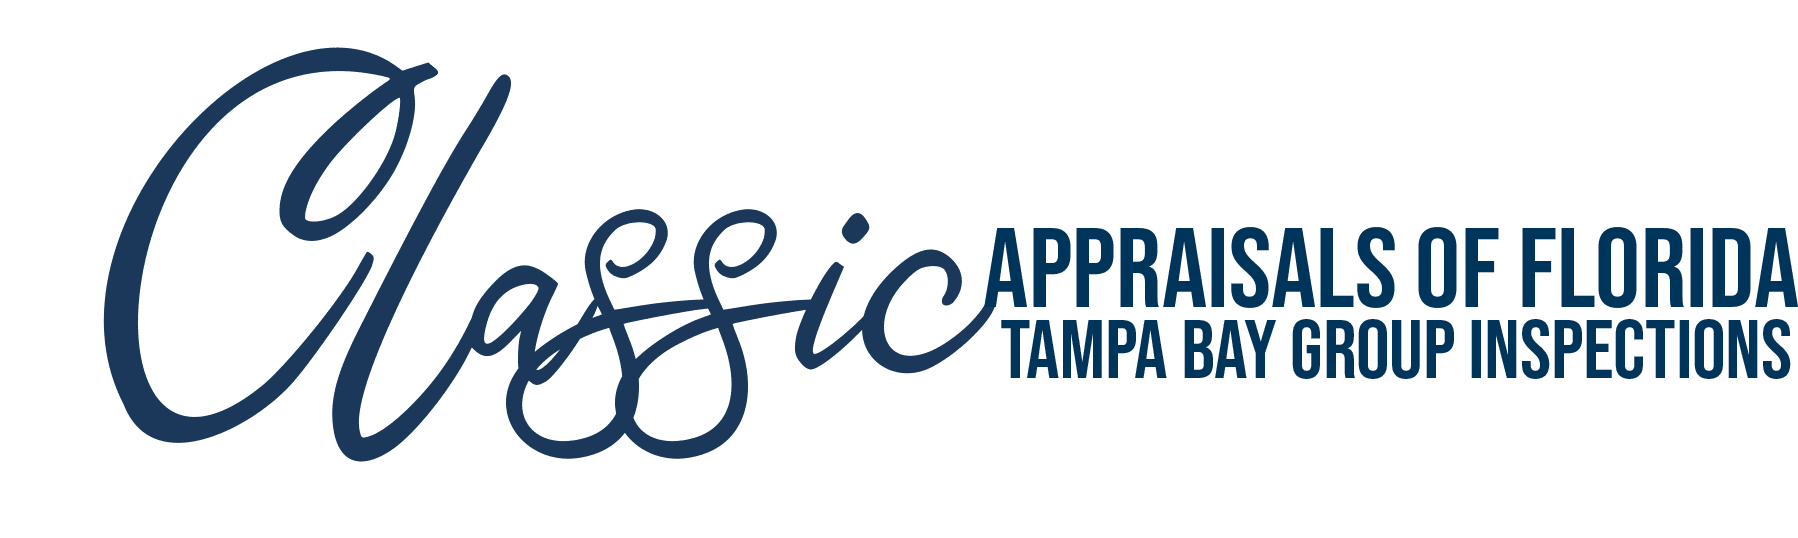 Classic Appraisals of Florida